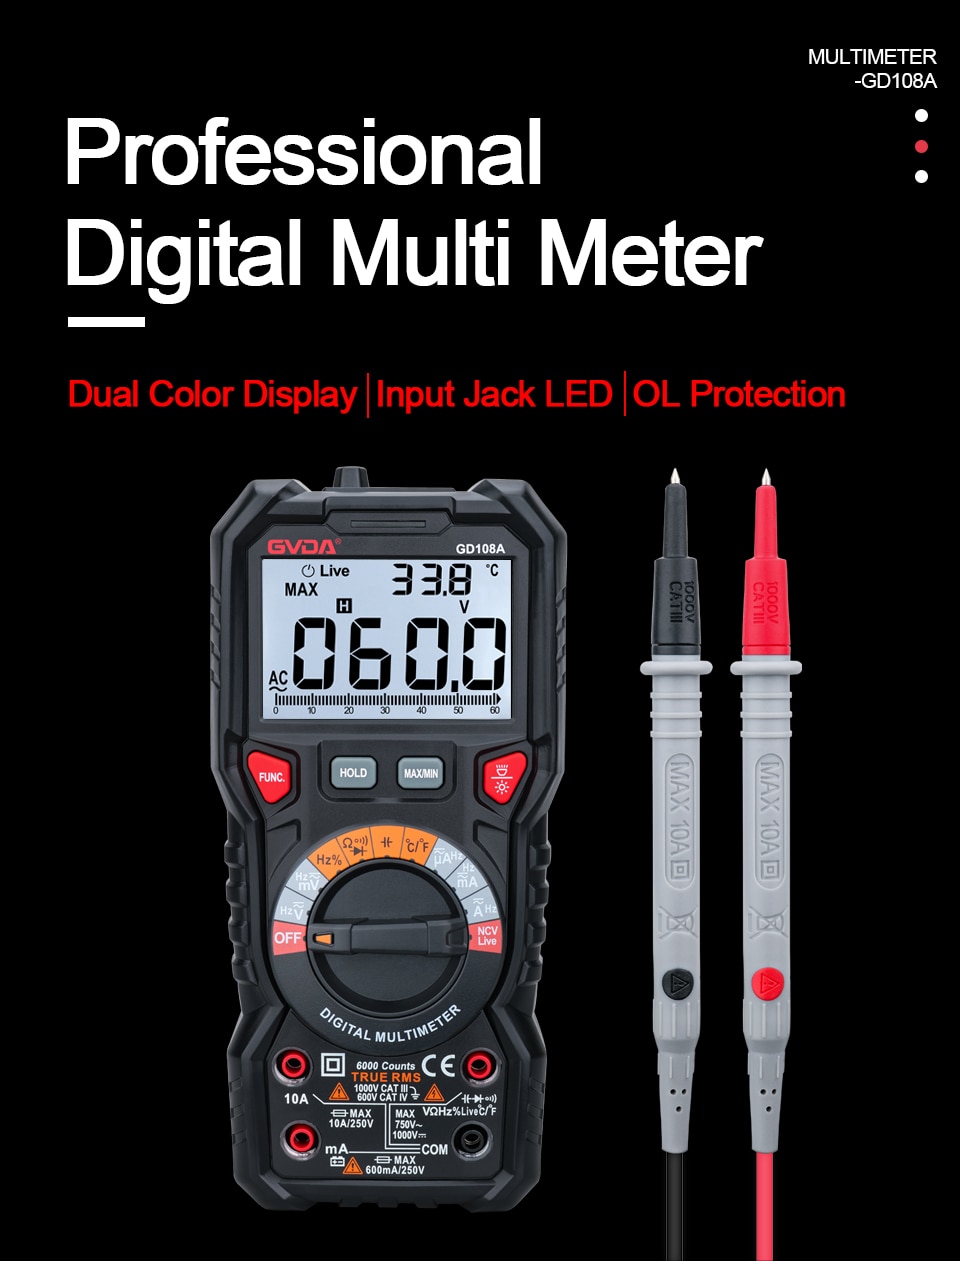 NEW Digital Multimeter